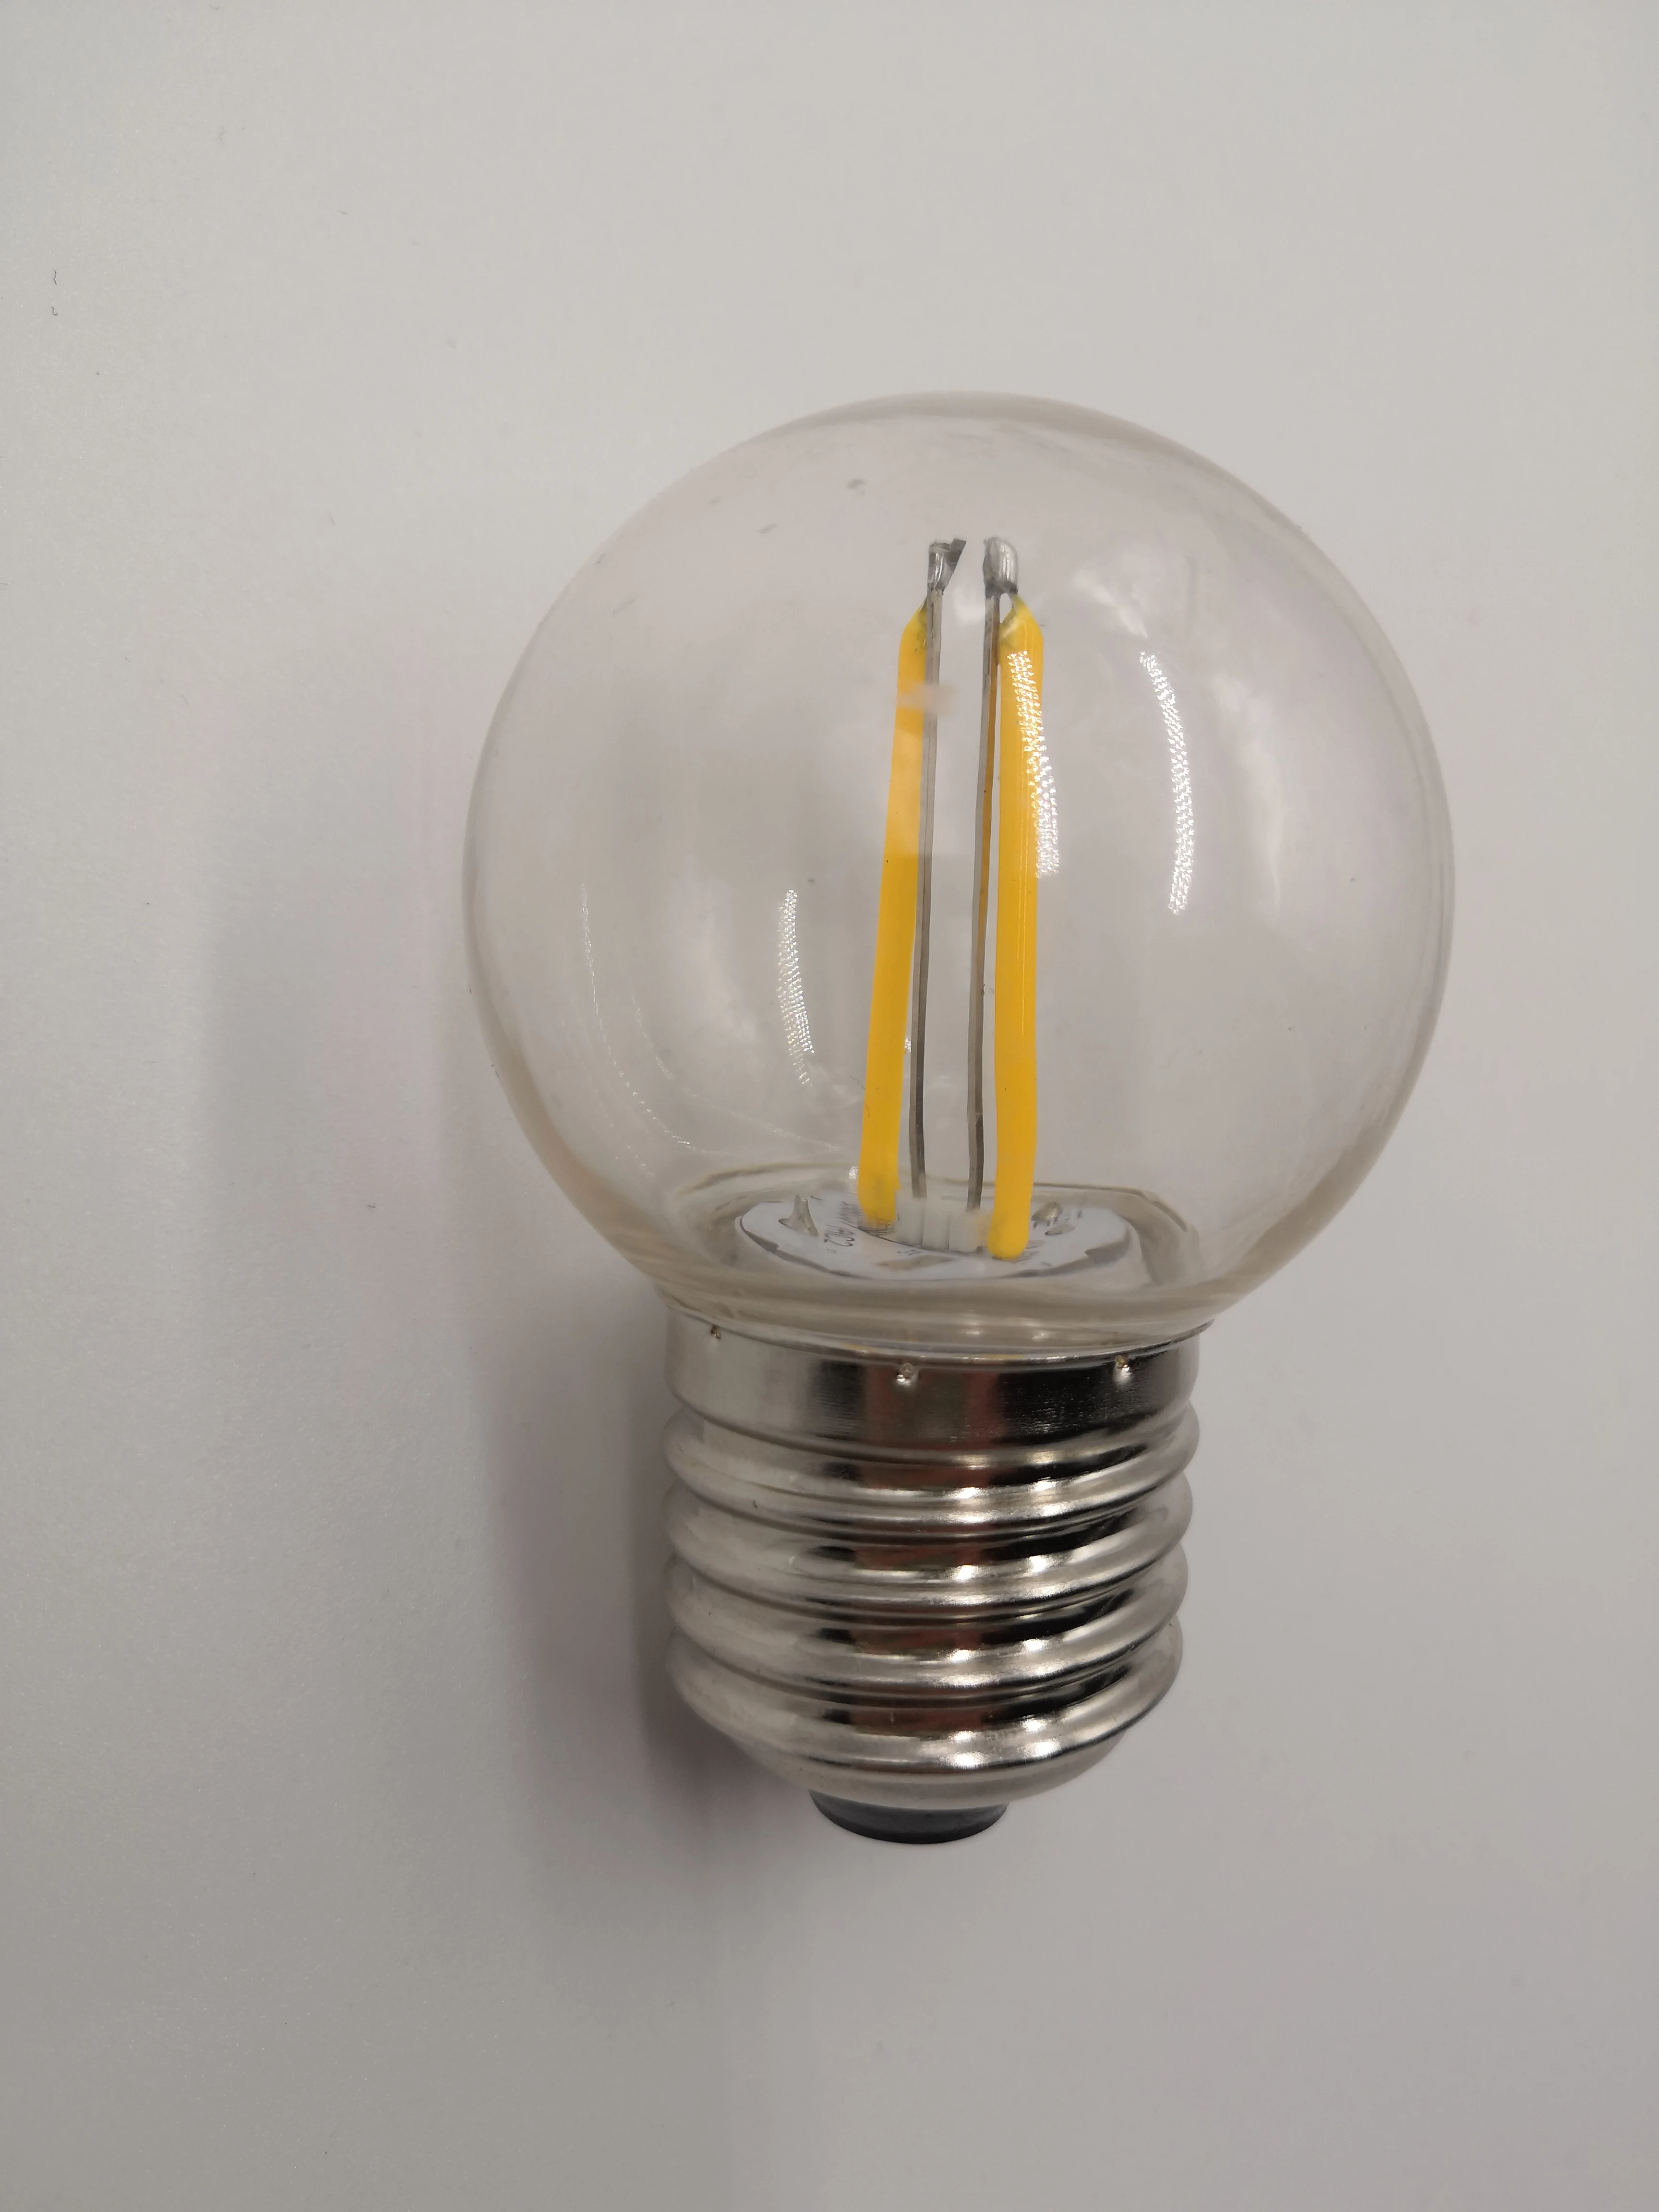 Outdoor decoration lights,filament E27 G45 festoon globe led bulb